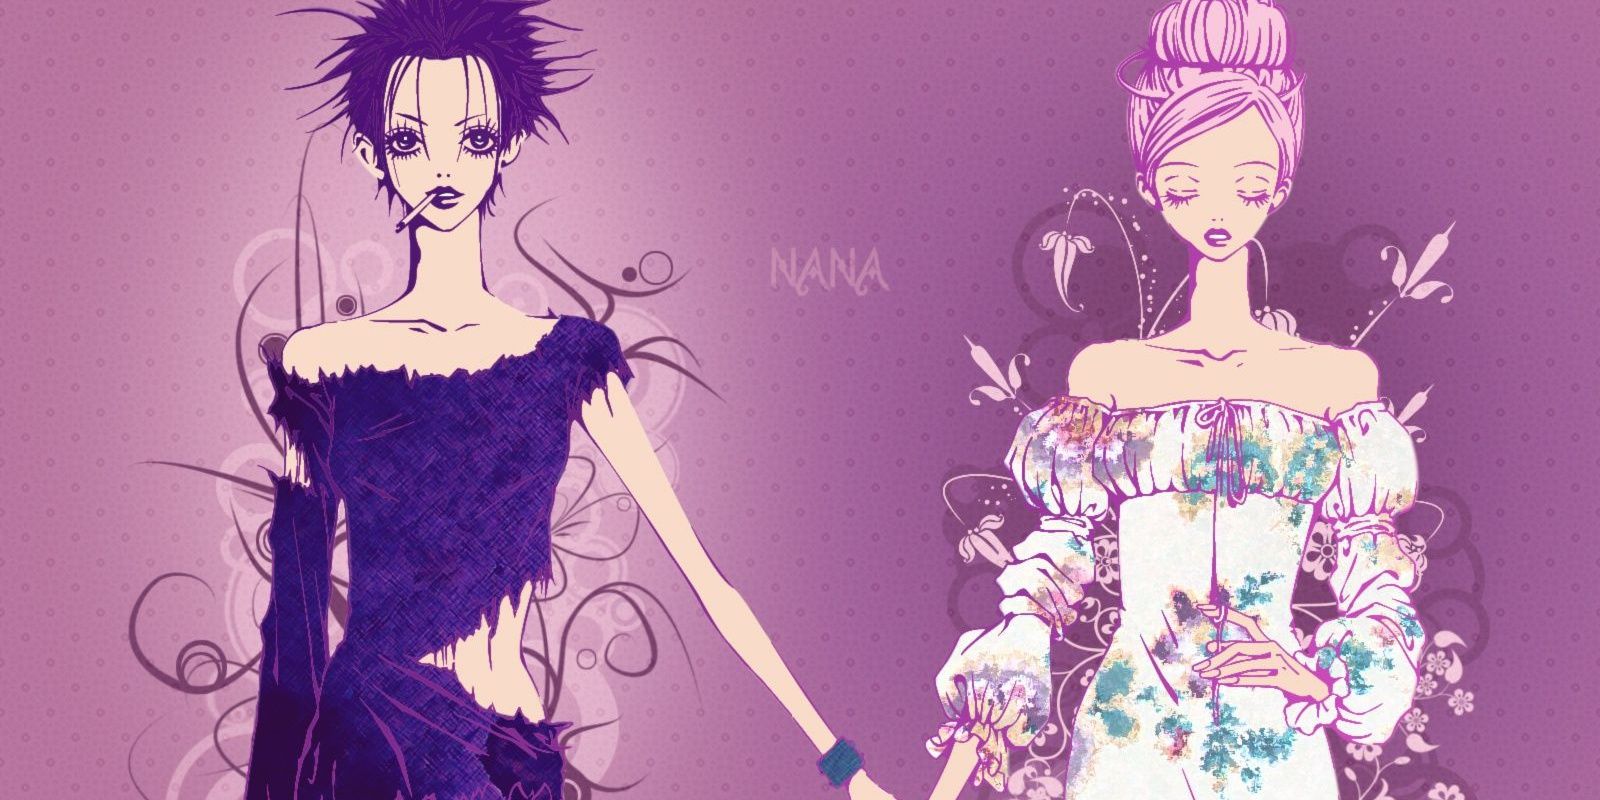 Nana anime 2007 characters holding hands.jpg